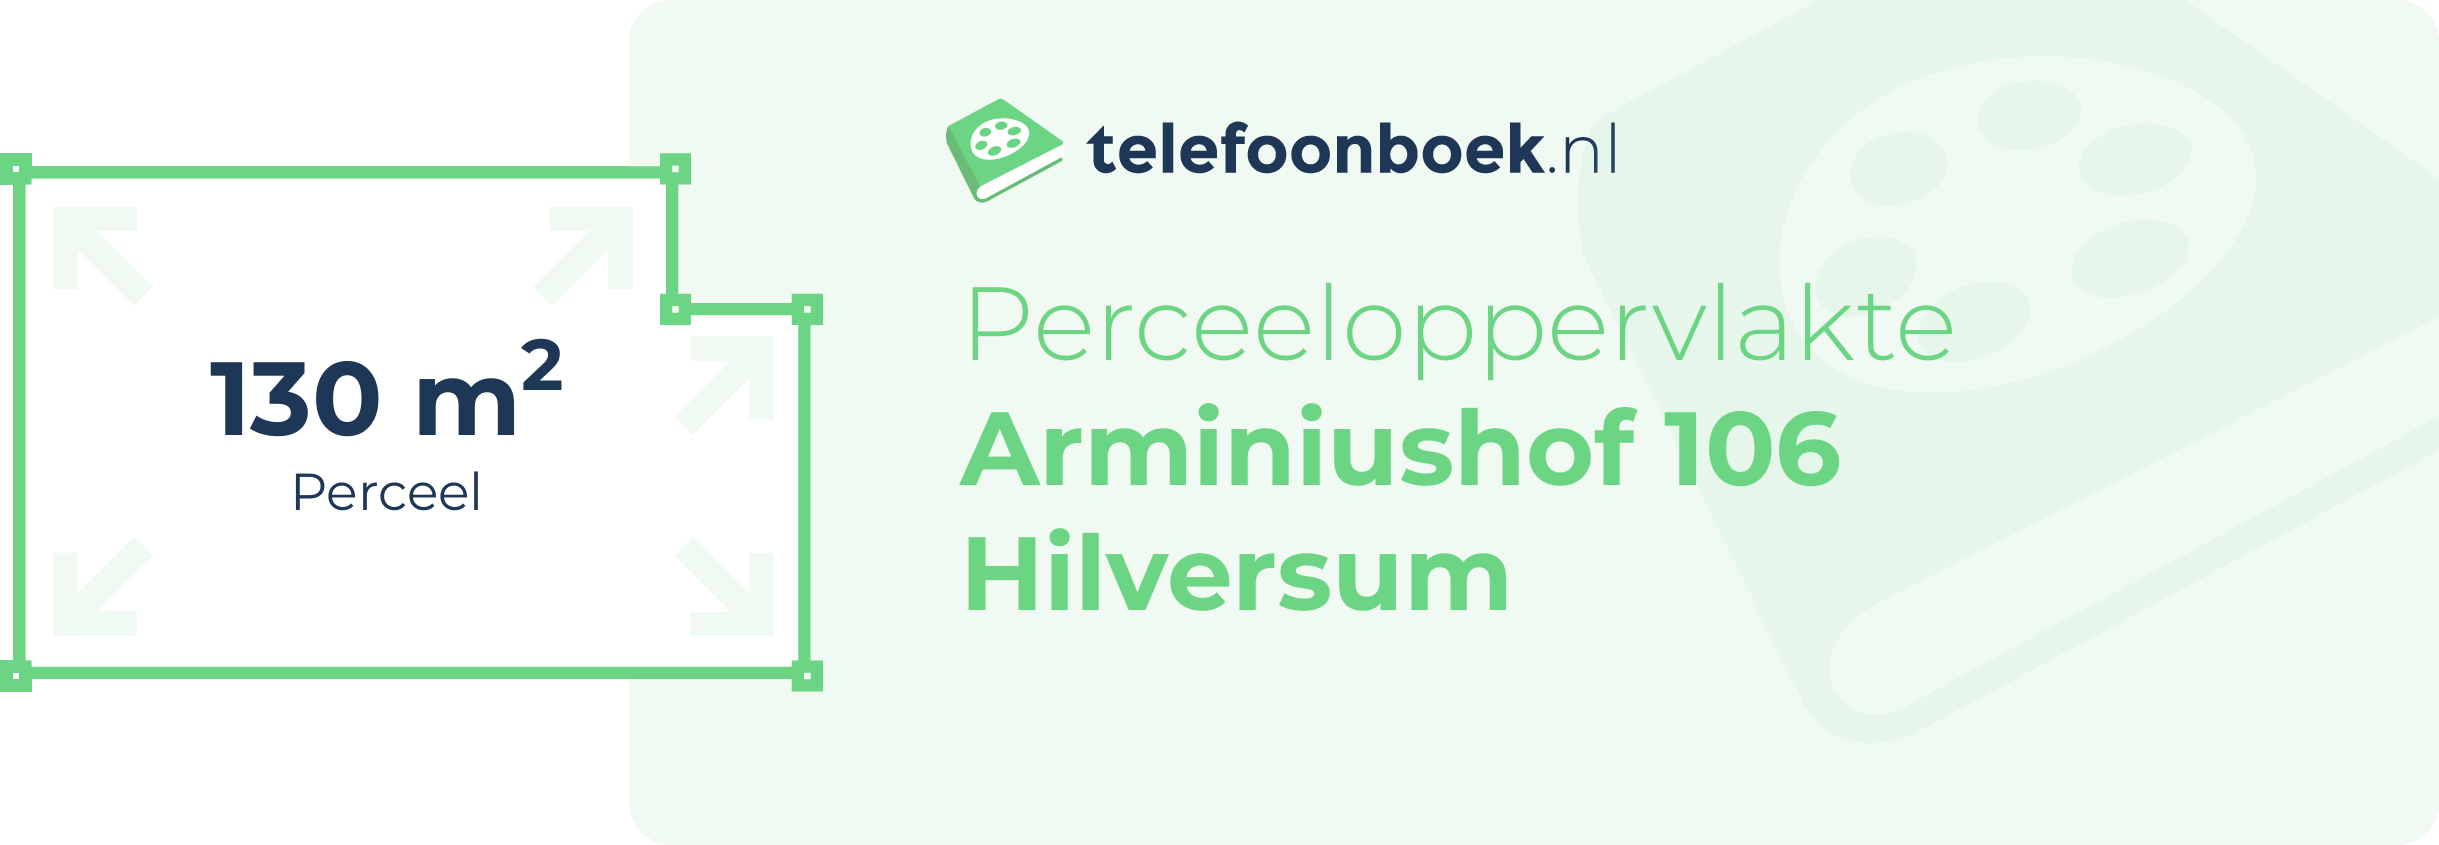 Perceeloppervlakte Arminiushof 106 Hilversum